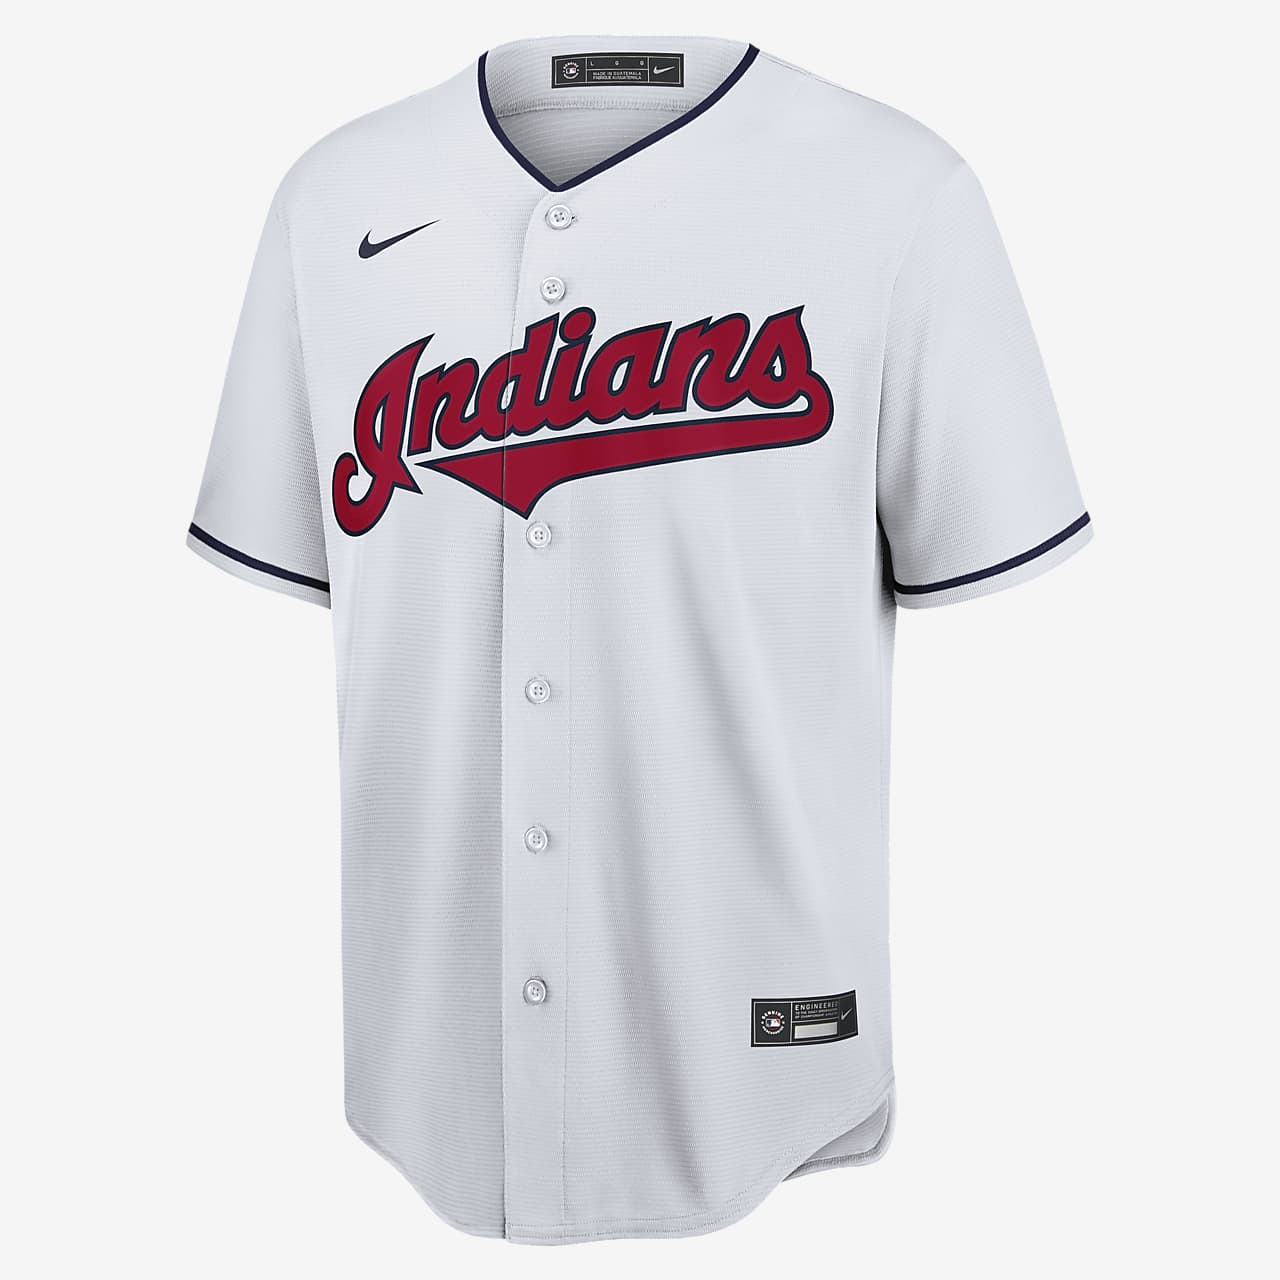 minor league baseball replica jerseys